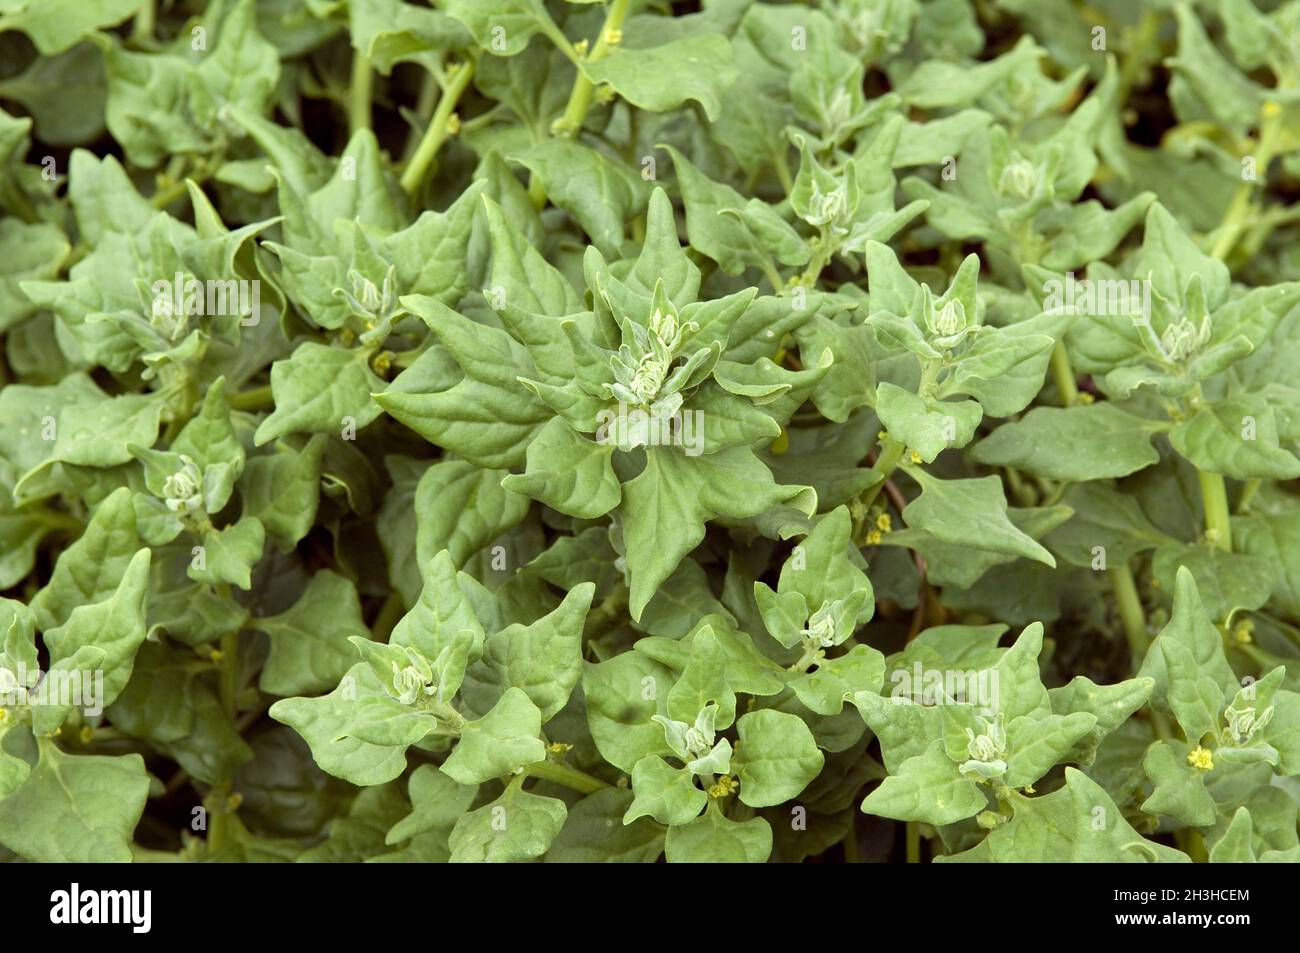 New Zealand spinach; Tetragonia Stock Photo